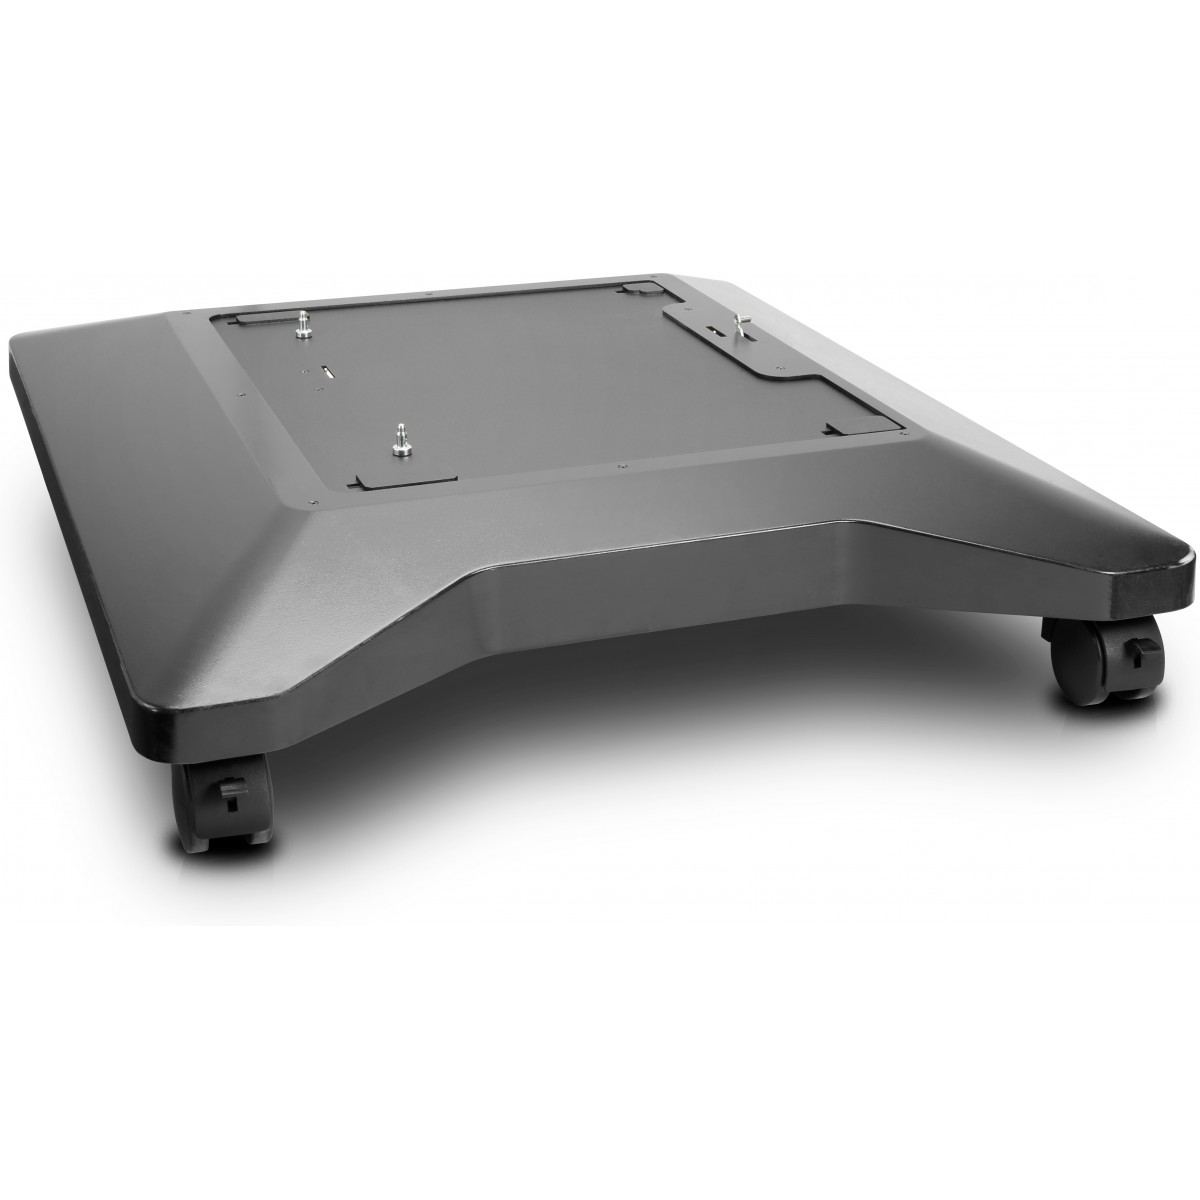 HP LaserJet Printer Stand - White - LaserJet Enterprise M607 - M608 - M609 - Business - 648 mm - 748 mm - 144 mm